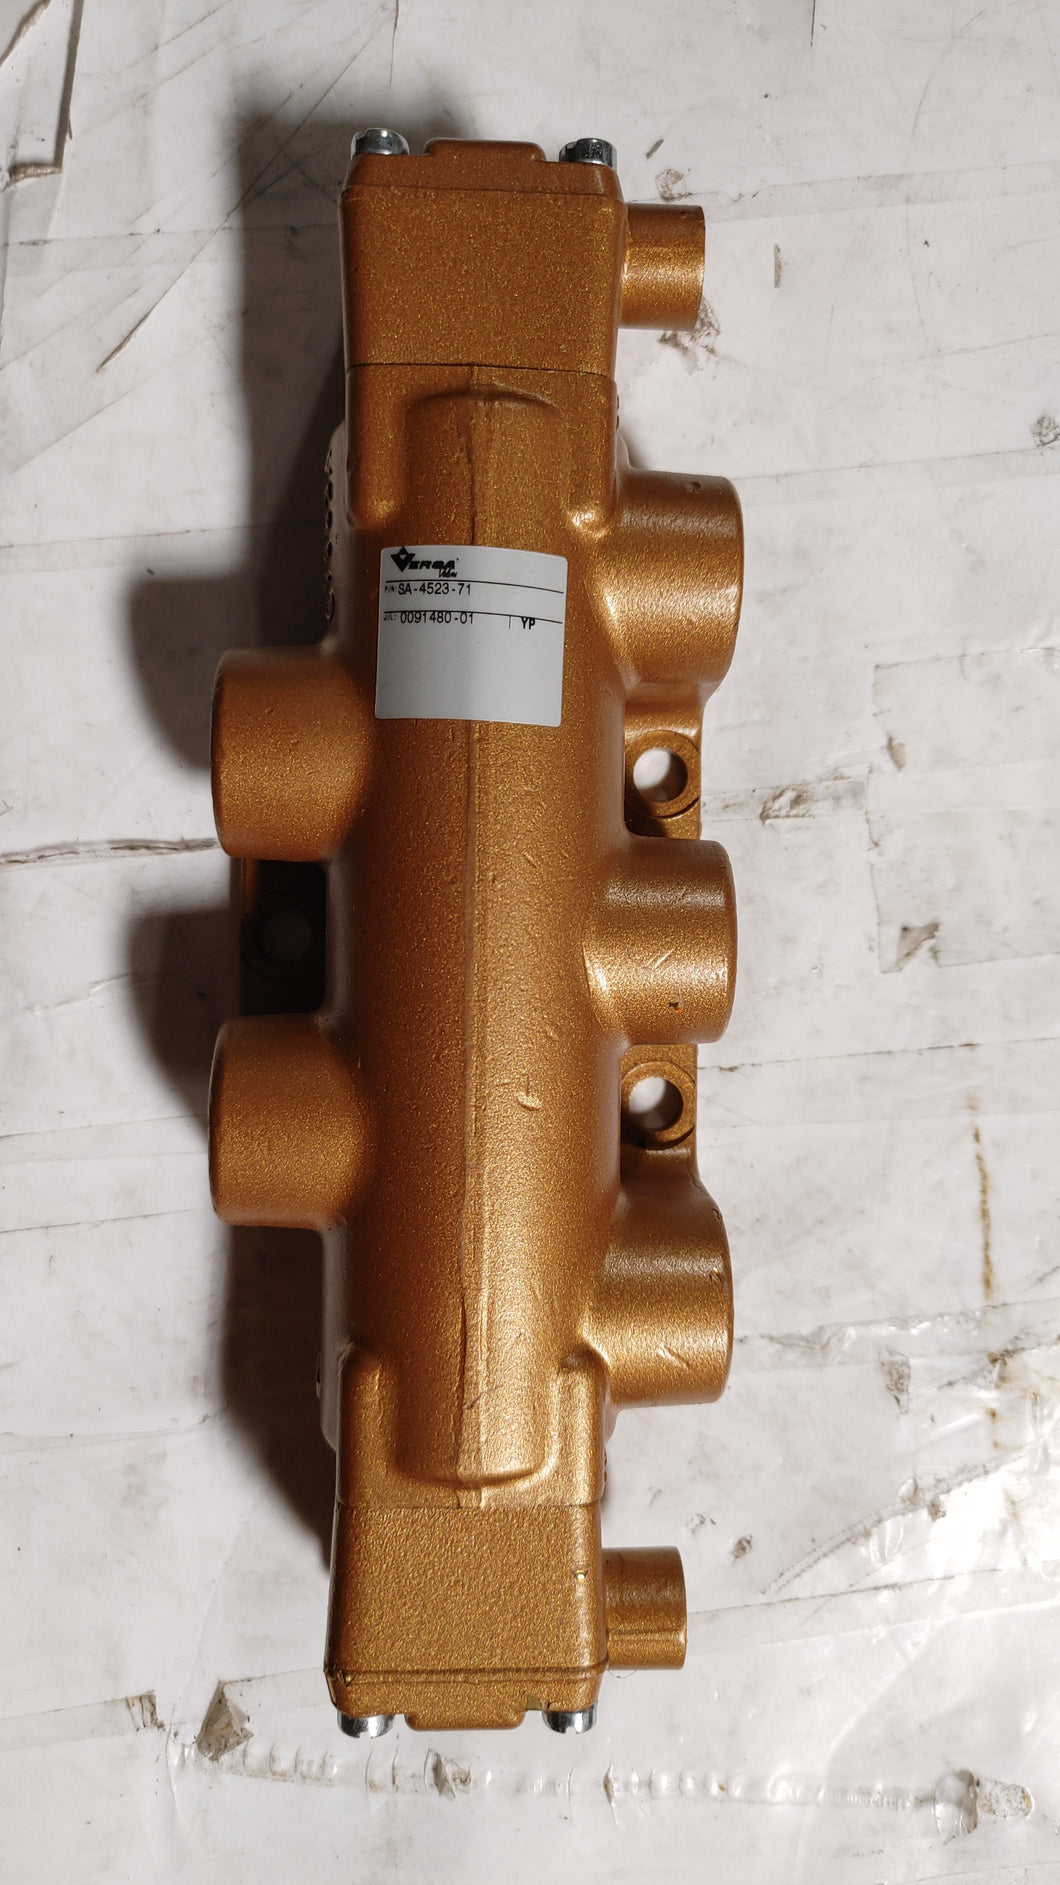 SA-4523-71 - Versa - Body 4 way valve